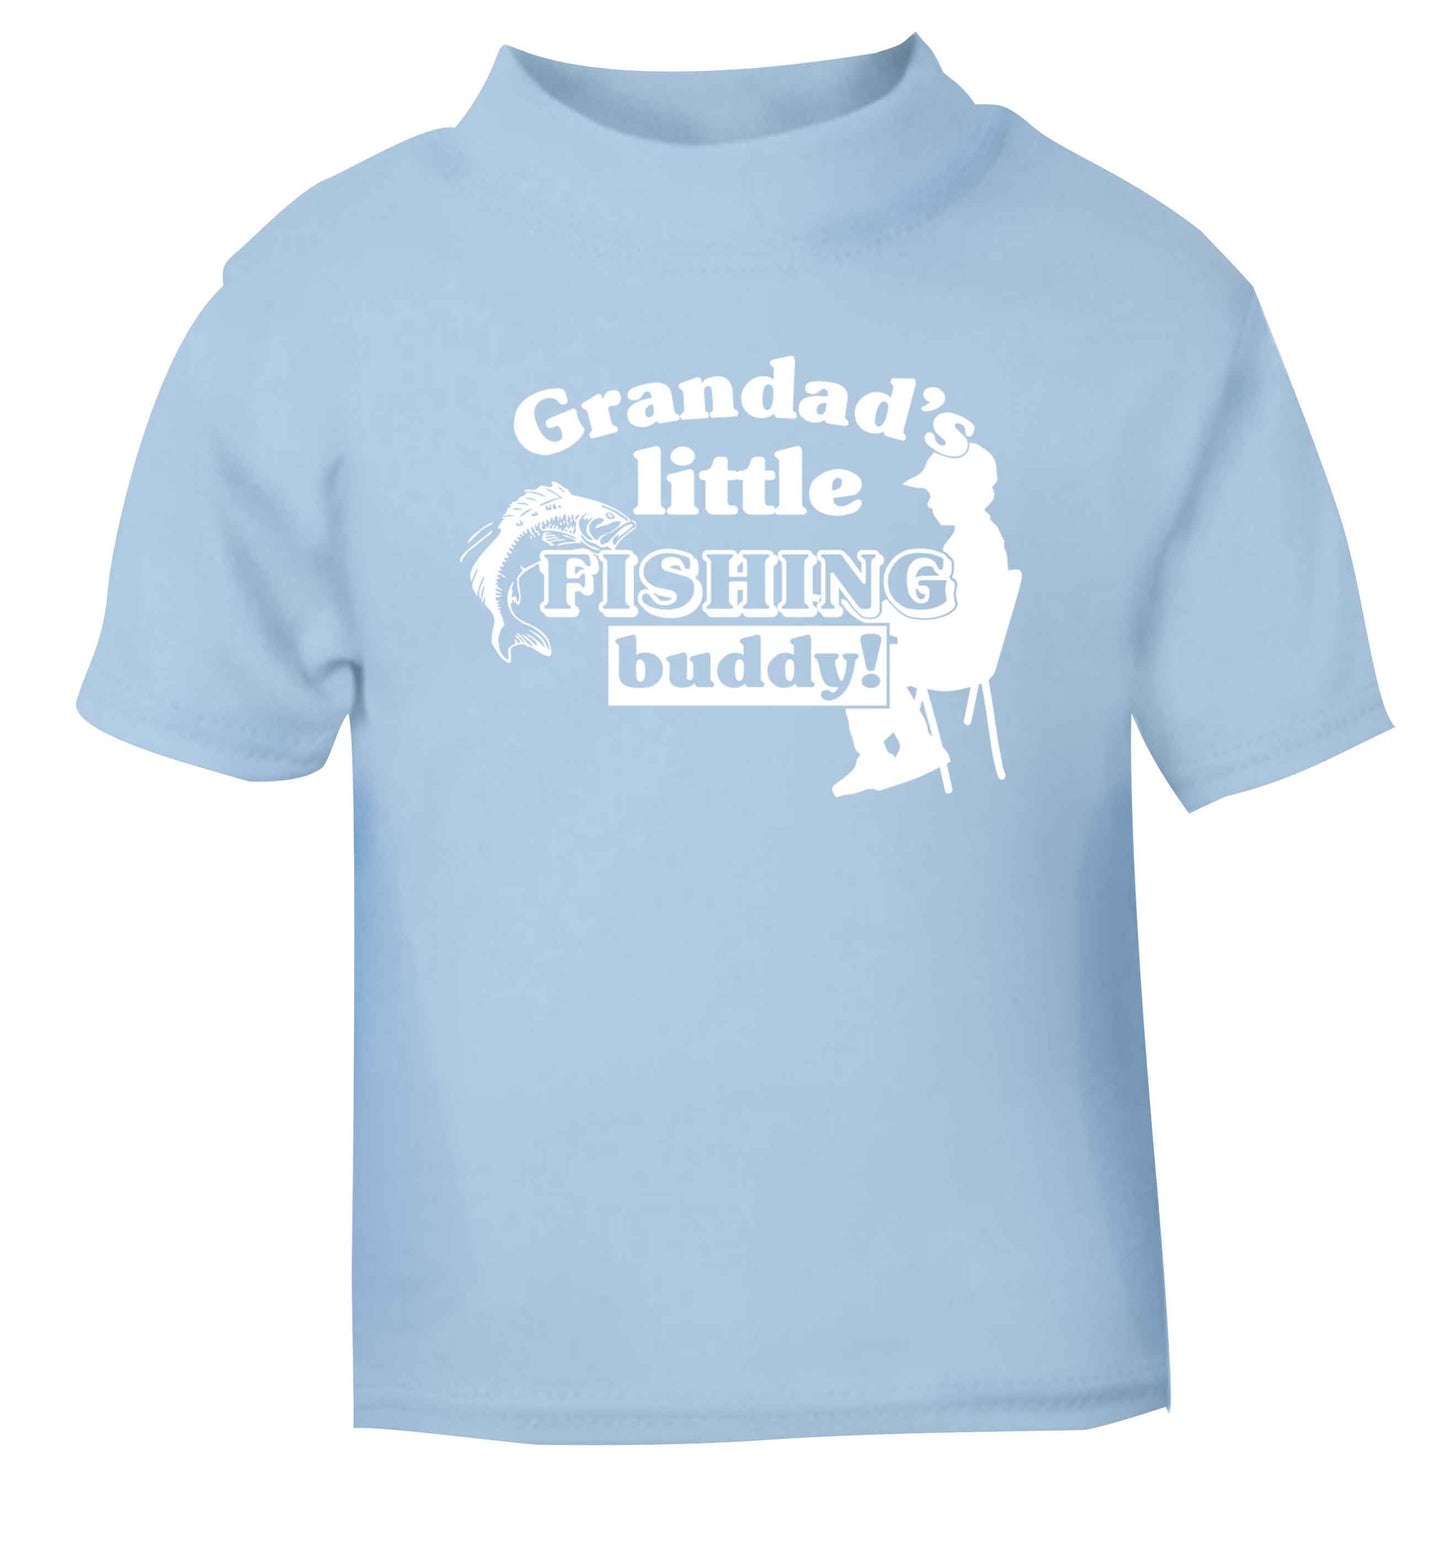 Grandad's little fishing buddy! light blue Baby Toddler Tshirt 2 Years